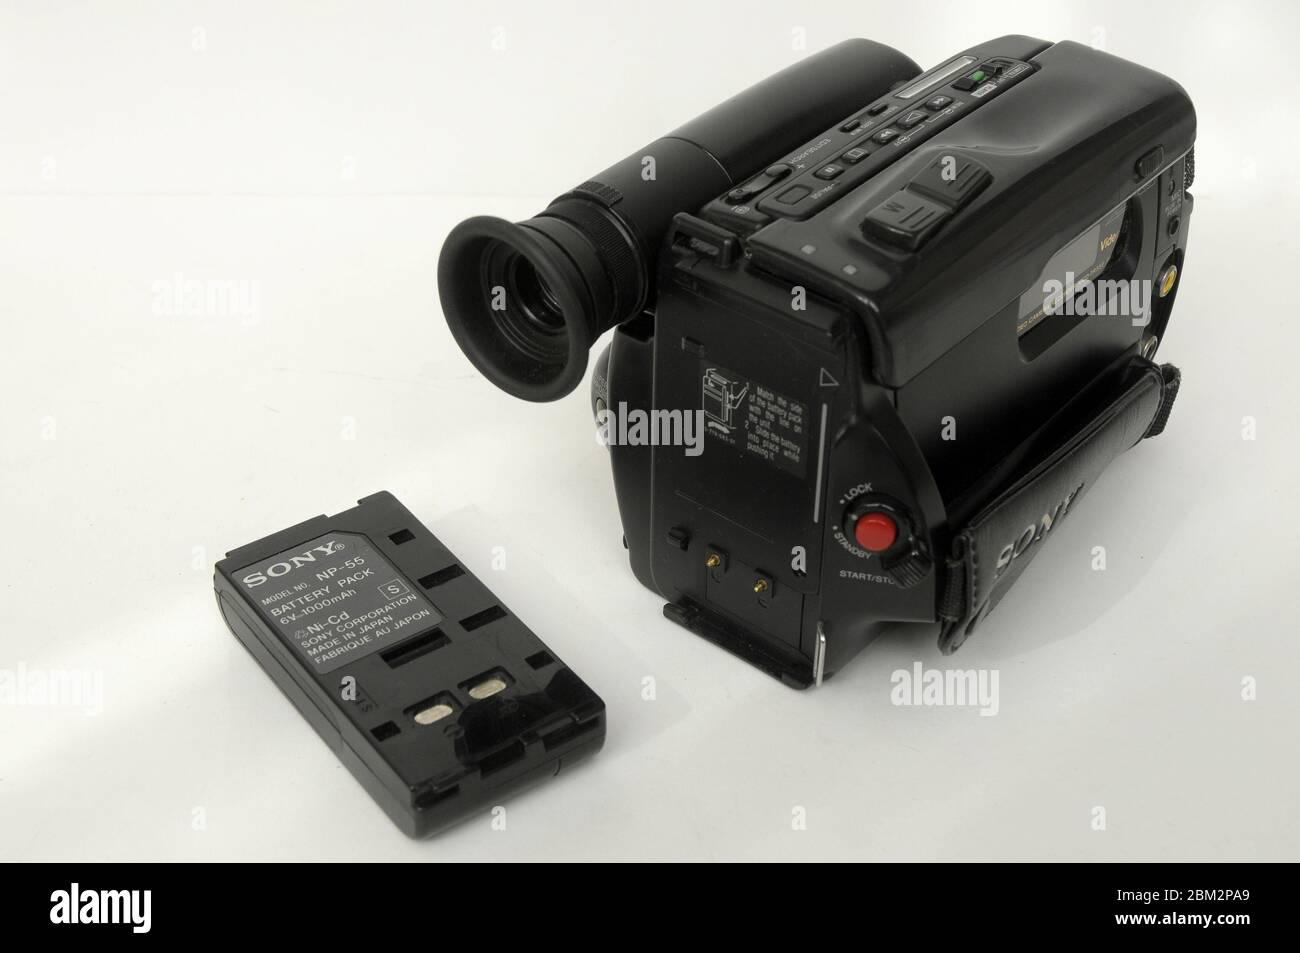 Sony Handycam Video Camera, 1990s Stock Photo - Alamy